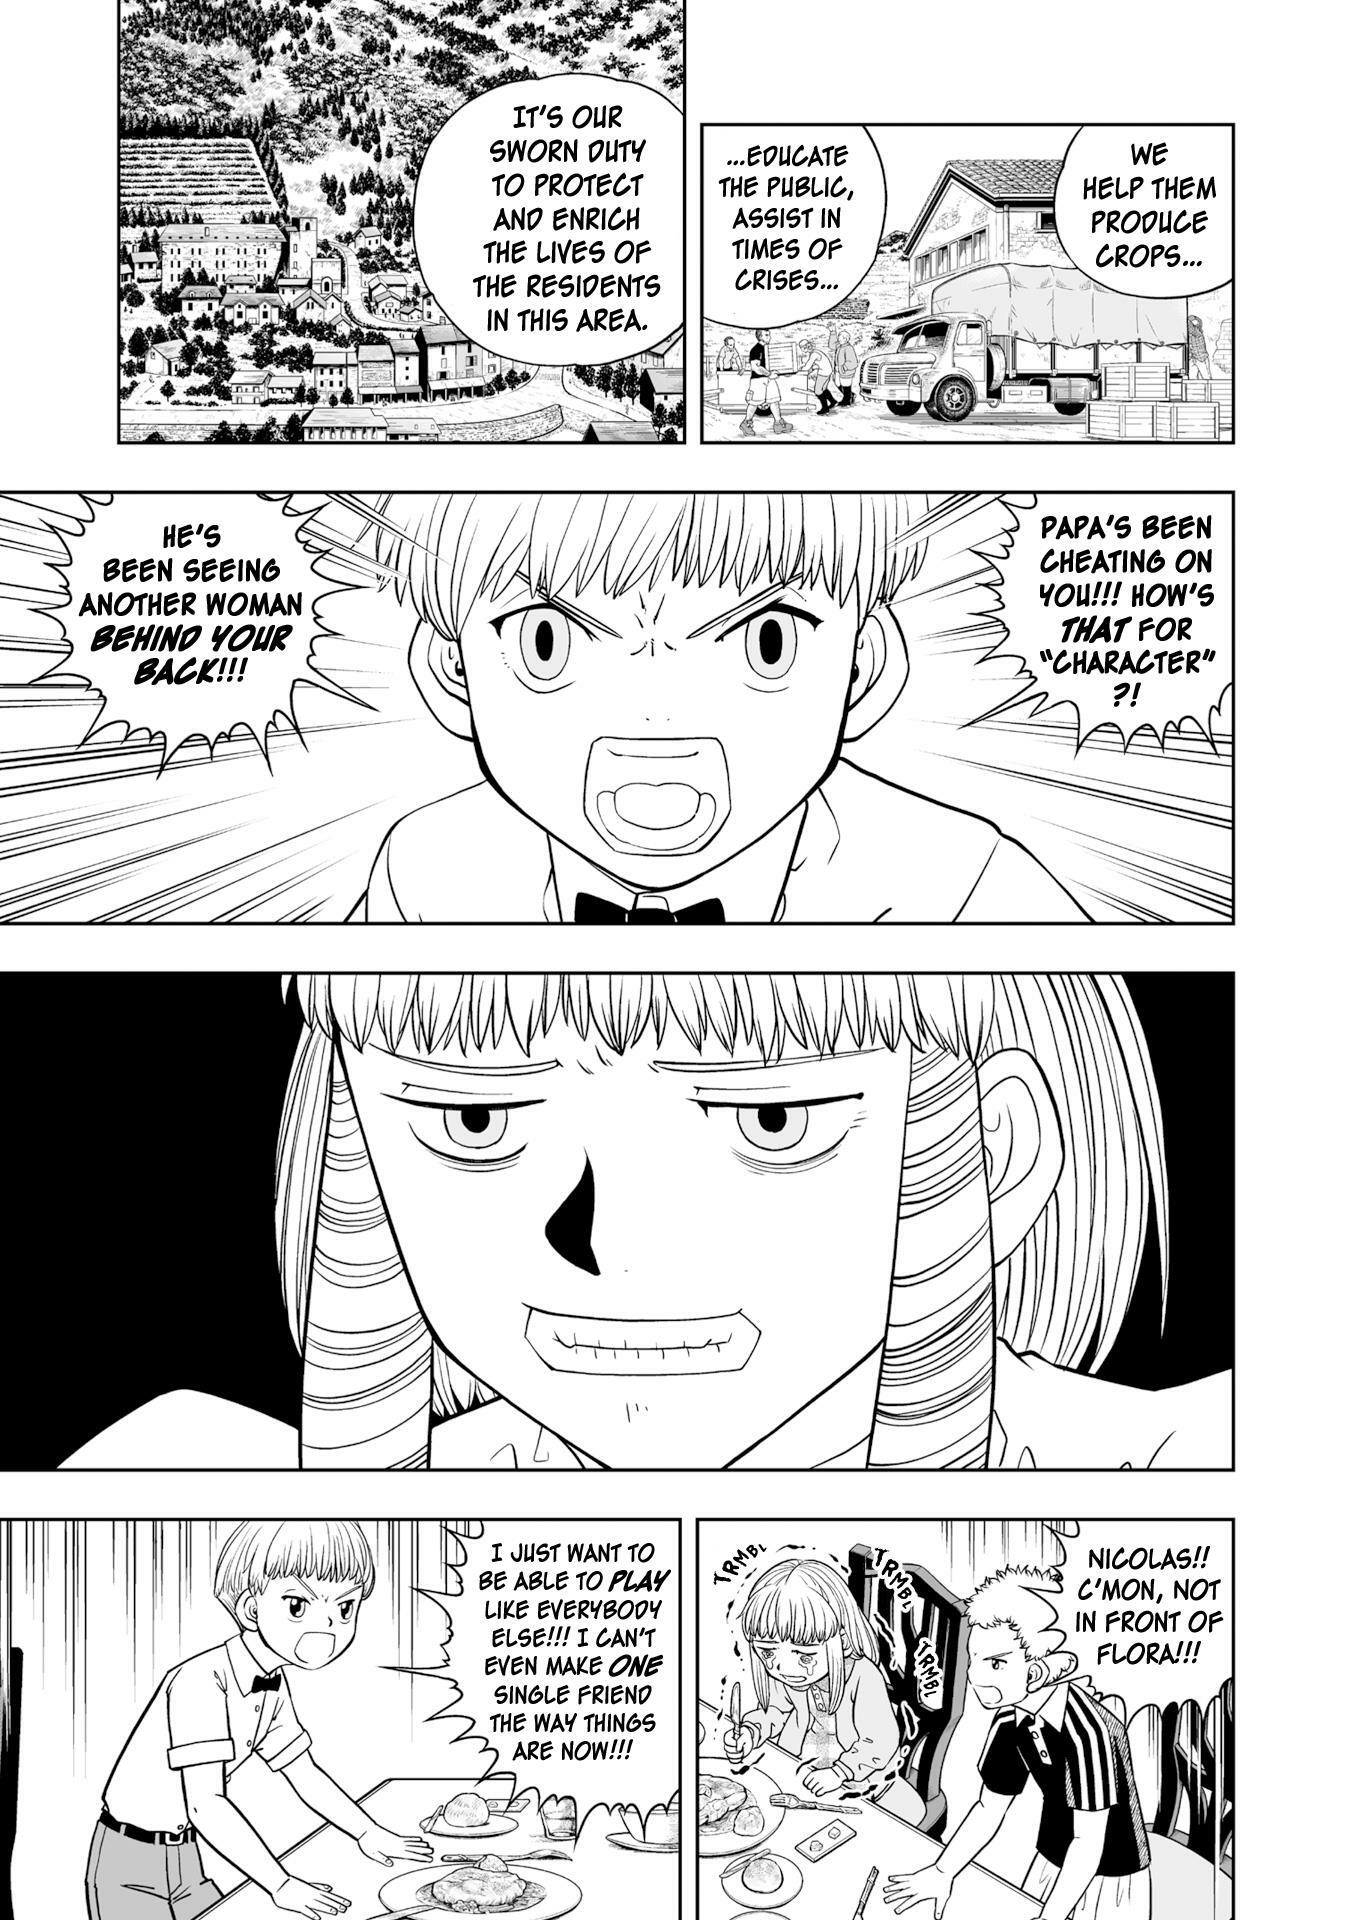 Zatch Bell! 2 Manga - Read Manga Online Free